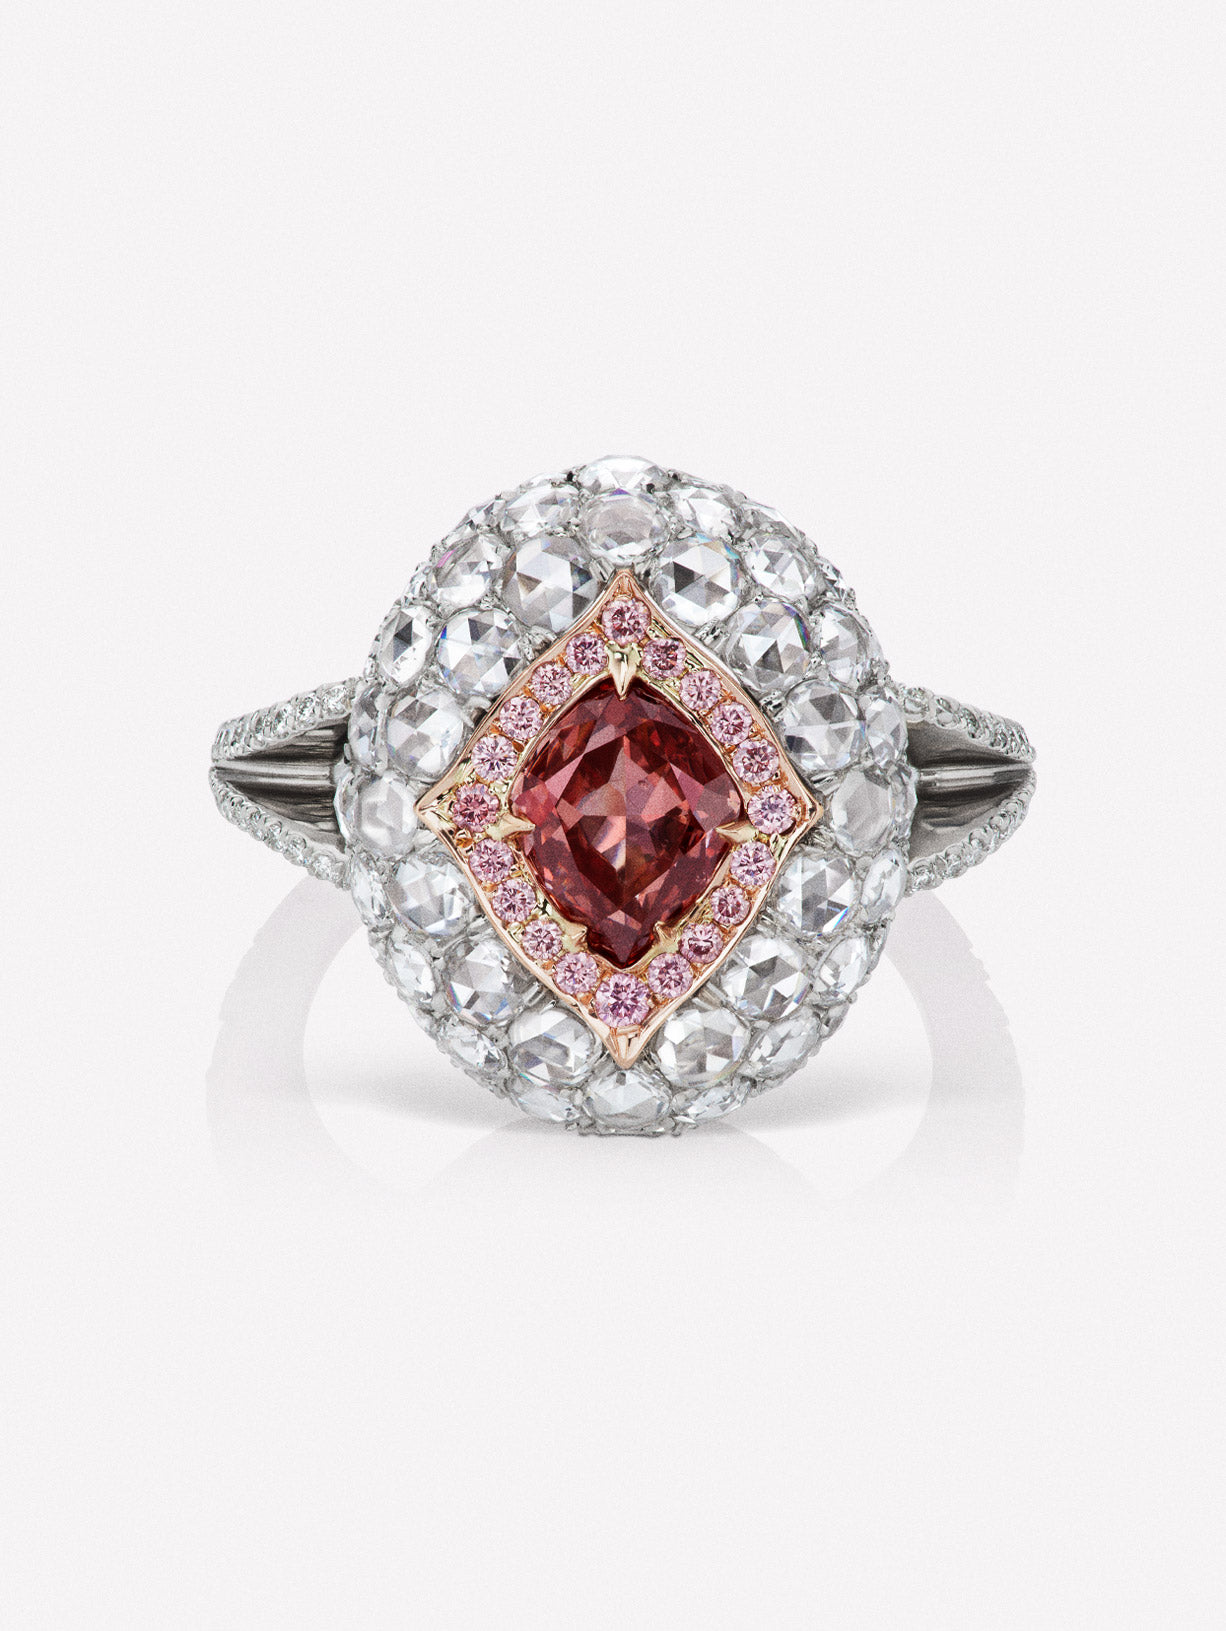 Intense Orangy Pink Diamond Dome Ring - Pink Diamonds, J FINE - J Fine, Rings - Pink Diamond Jewelry, intense-orangy-pink-diamond-dome-ring-by-j-fine - Argyle Pink Diamonds